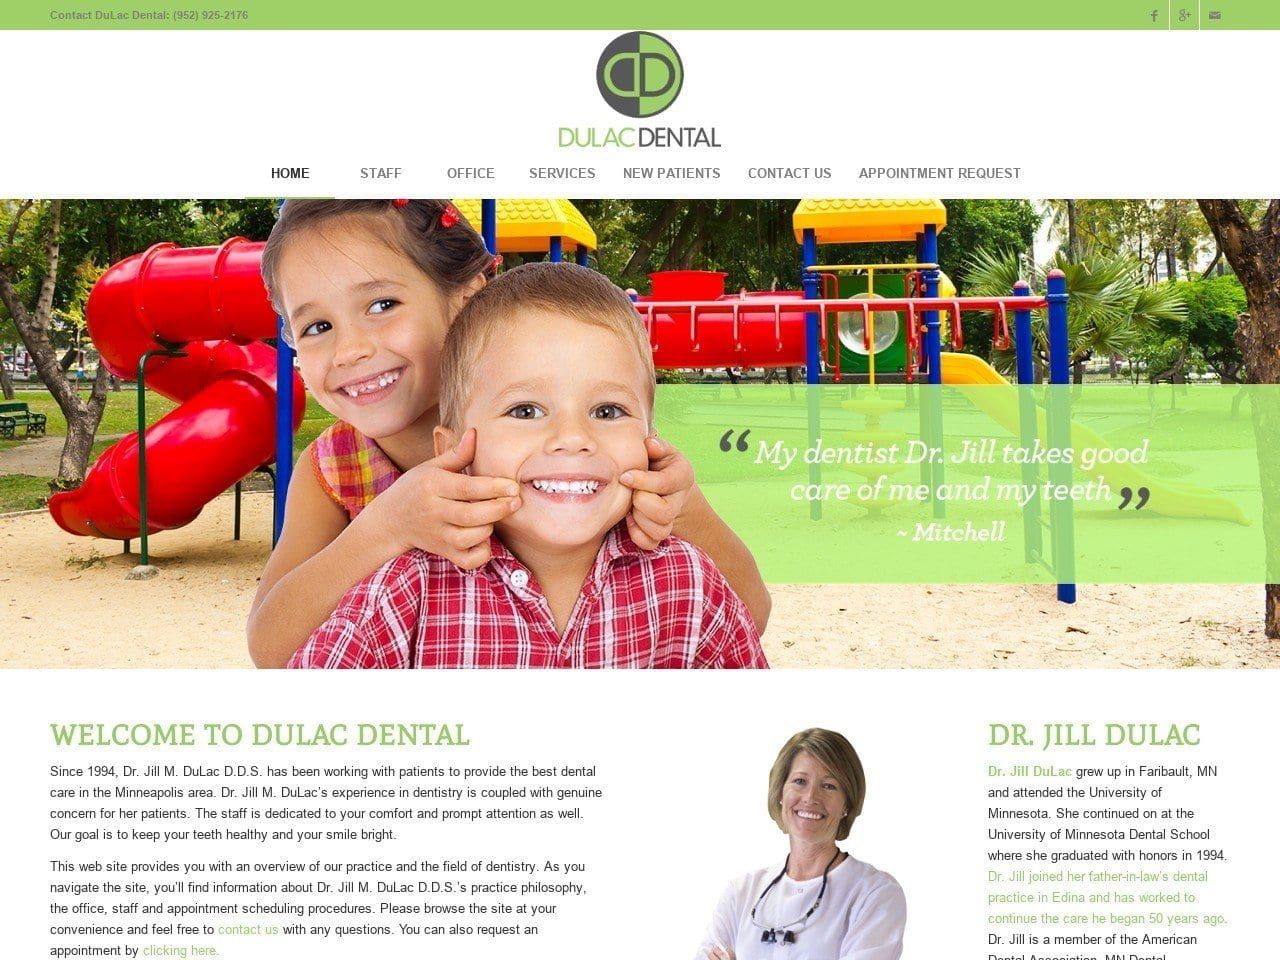 DuLac Dental Website Screenshot from dulacdental.com